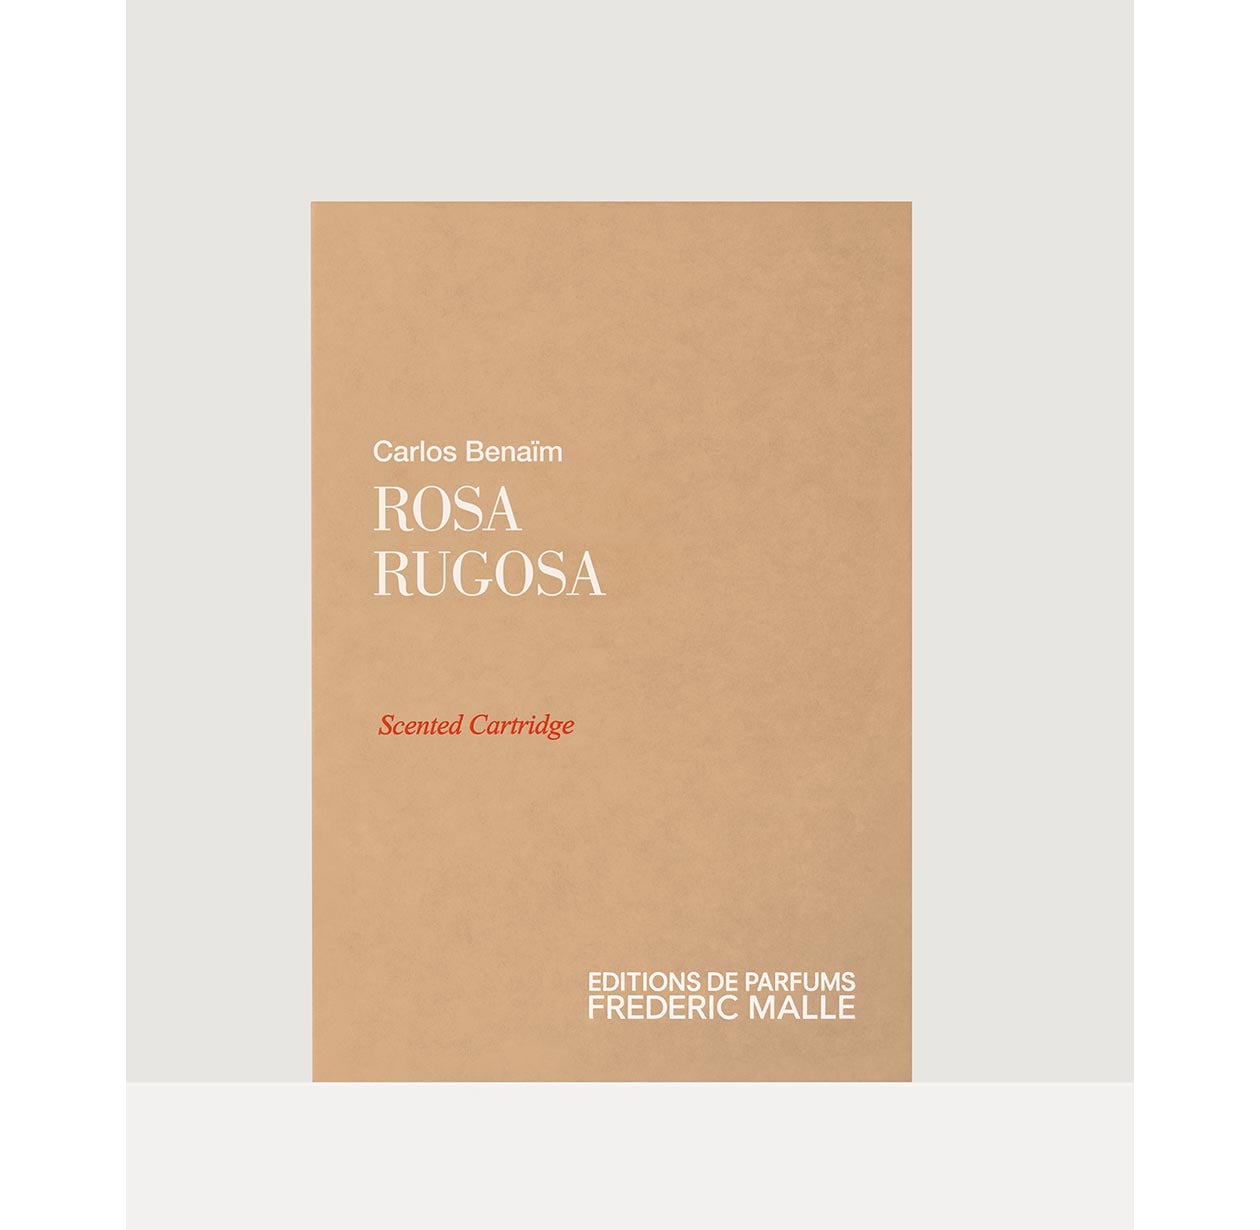 Rosa Rugosa Scented Cartridge